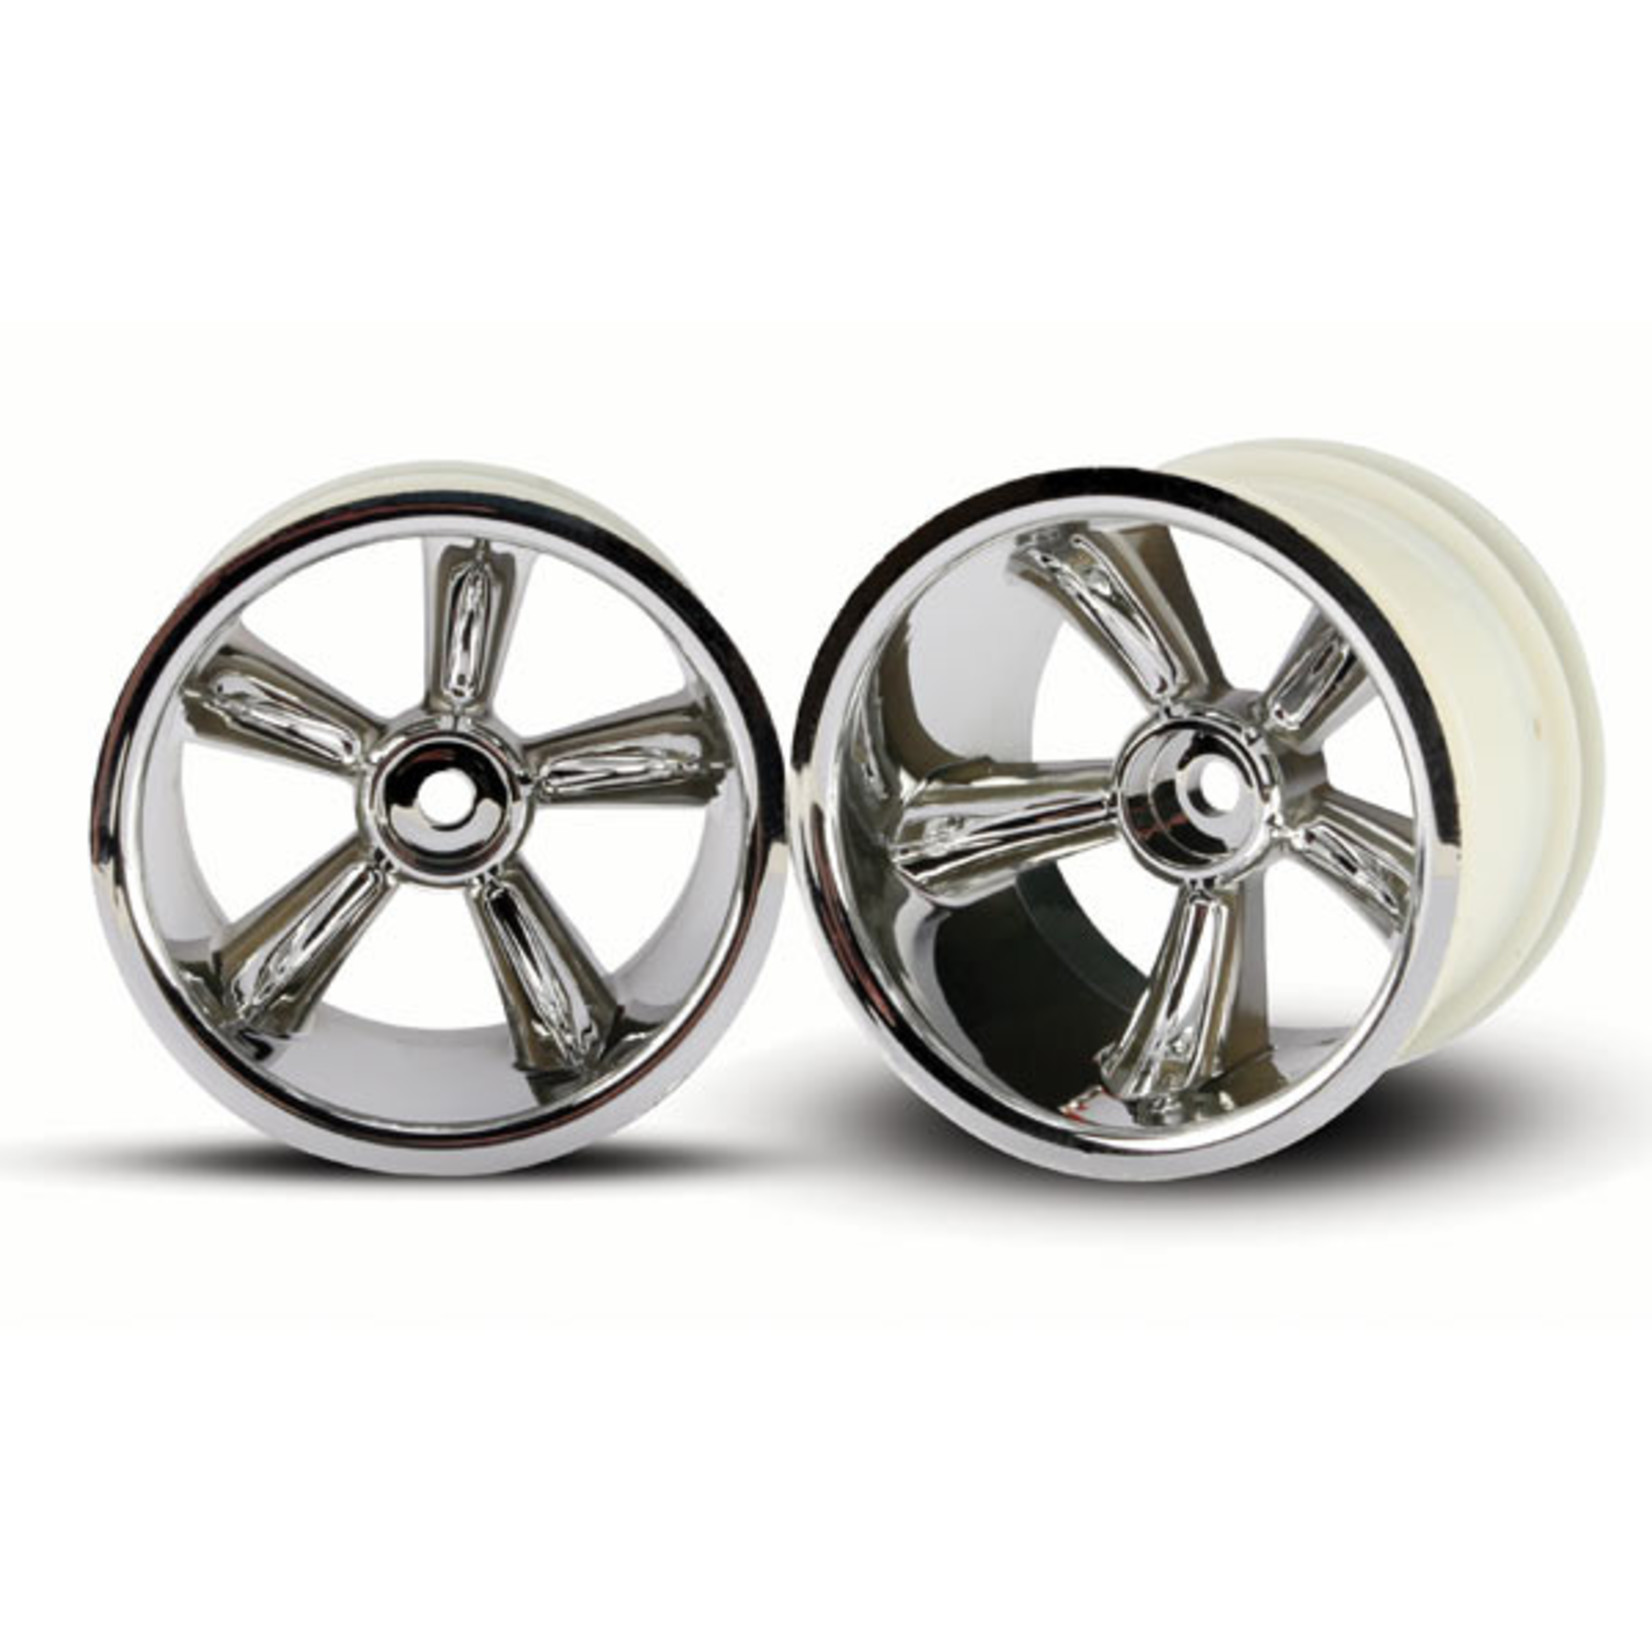 Traxxas 4172 - TRX Pro-Star chrome wheels (2) (rear) (for